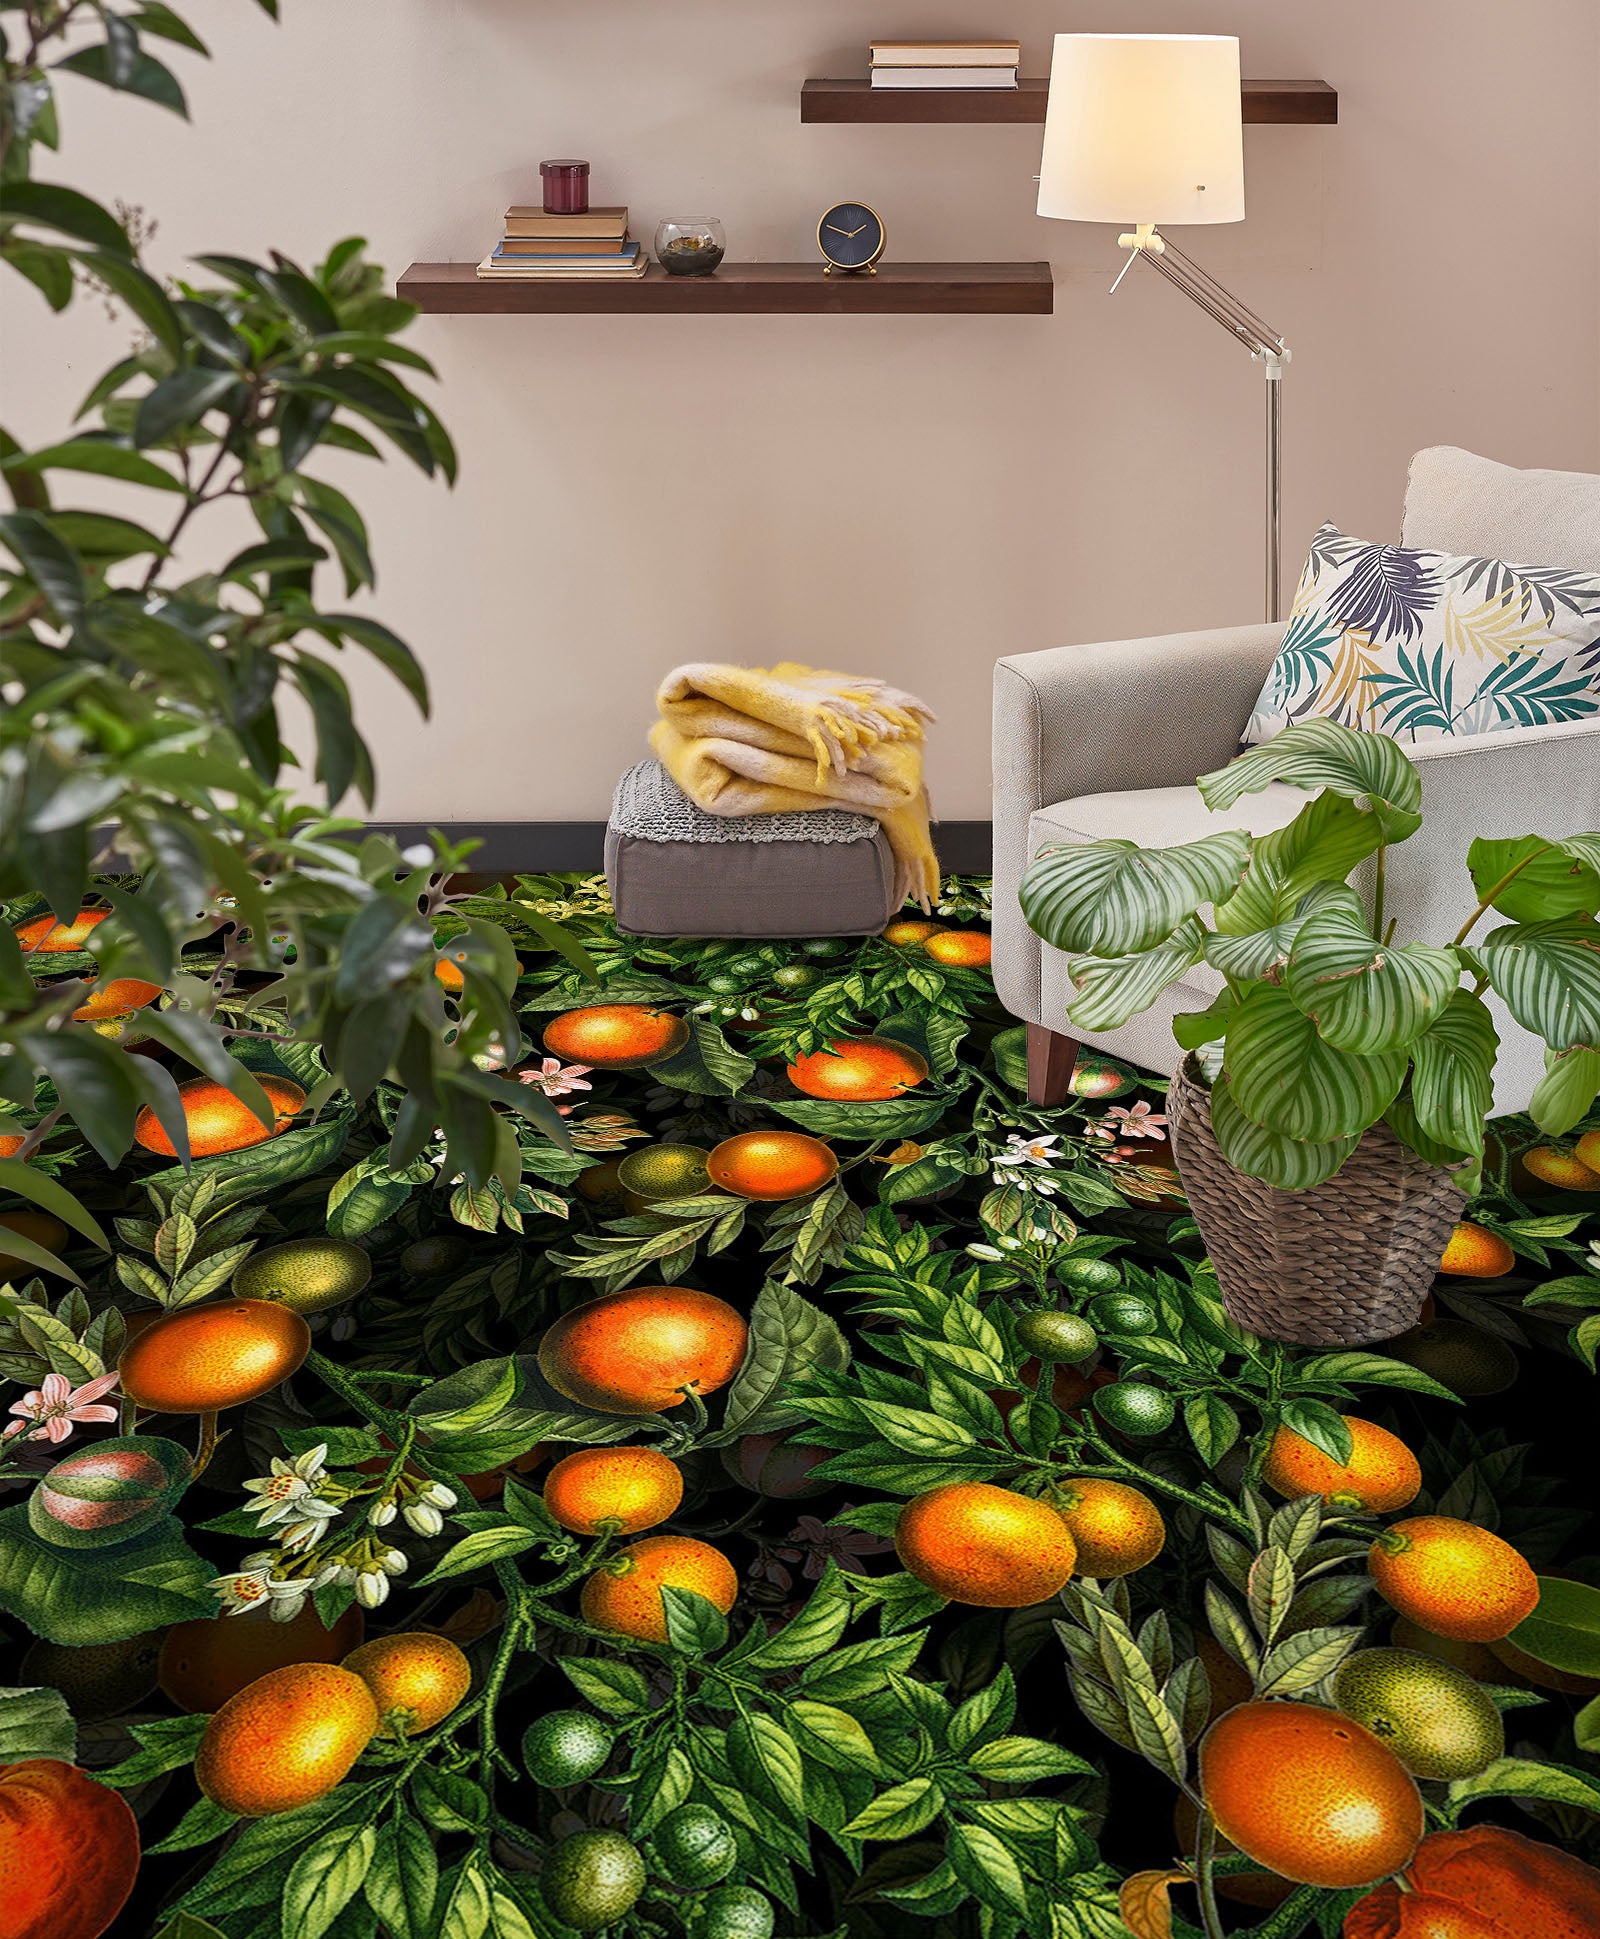 3D Orange Leaves 99183 Uta Naumann Floor Mural  Wallpaper Murals Self-Adhesive Removable Print Epoxy